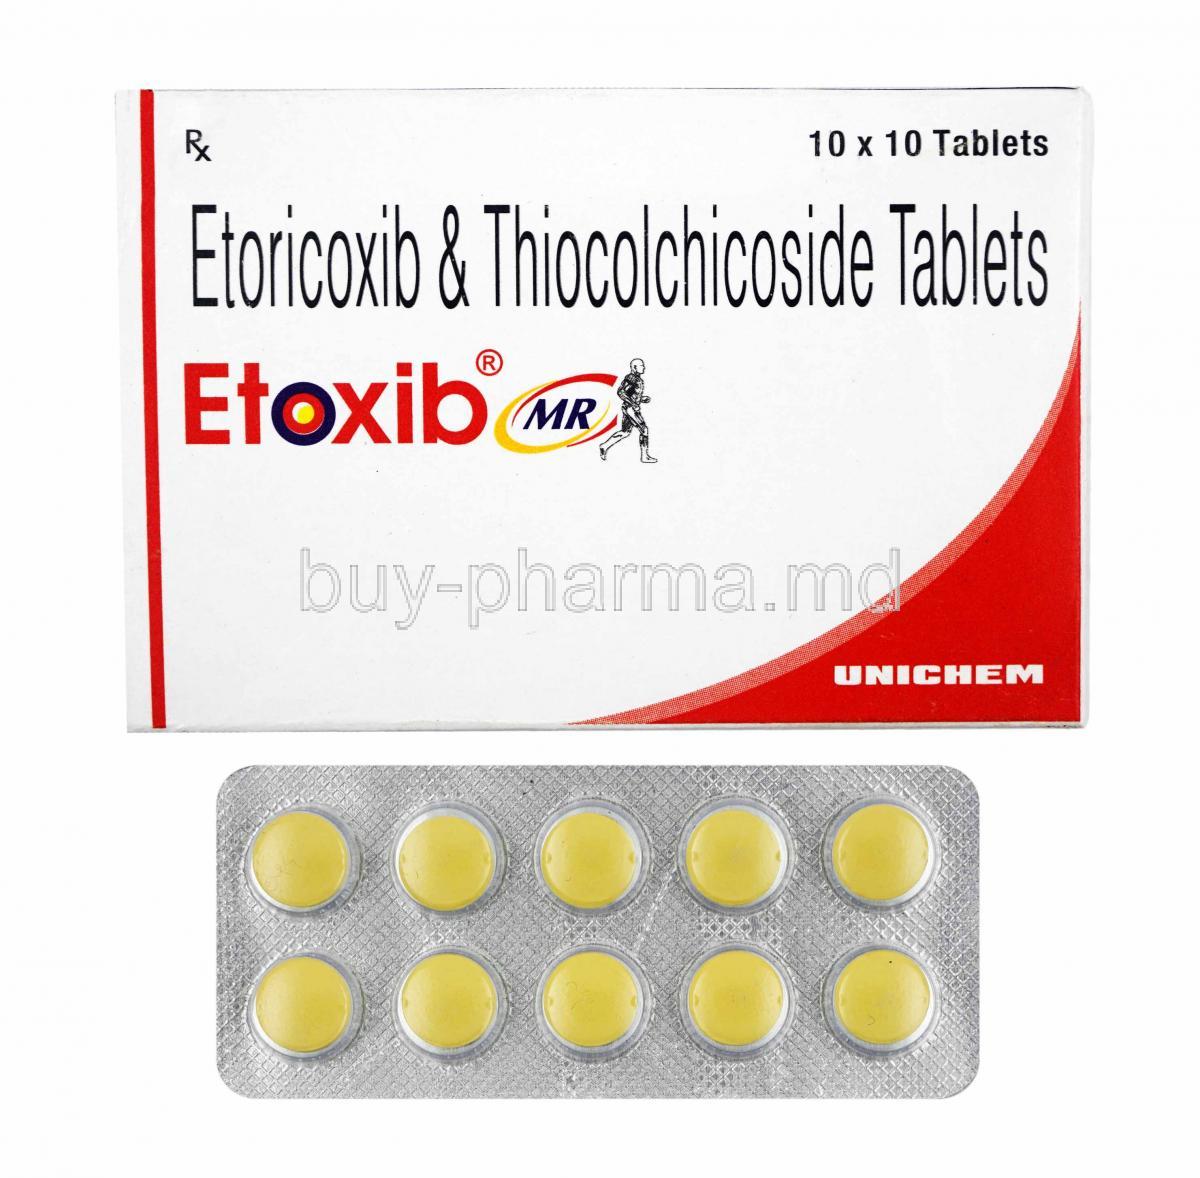 Etoxib MR, Etoricoxib and Thiocolchicoside box and tablets